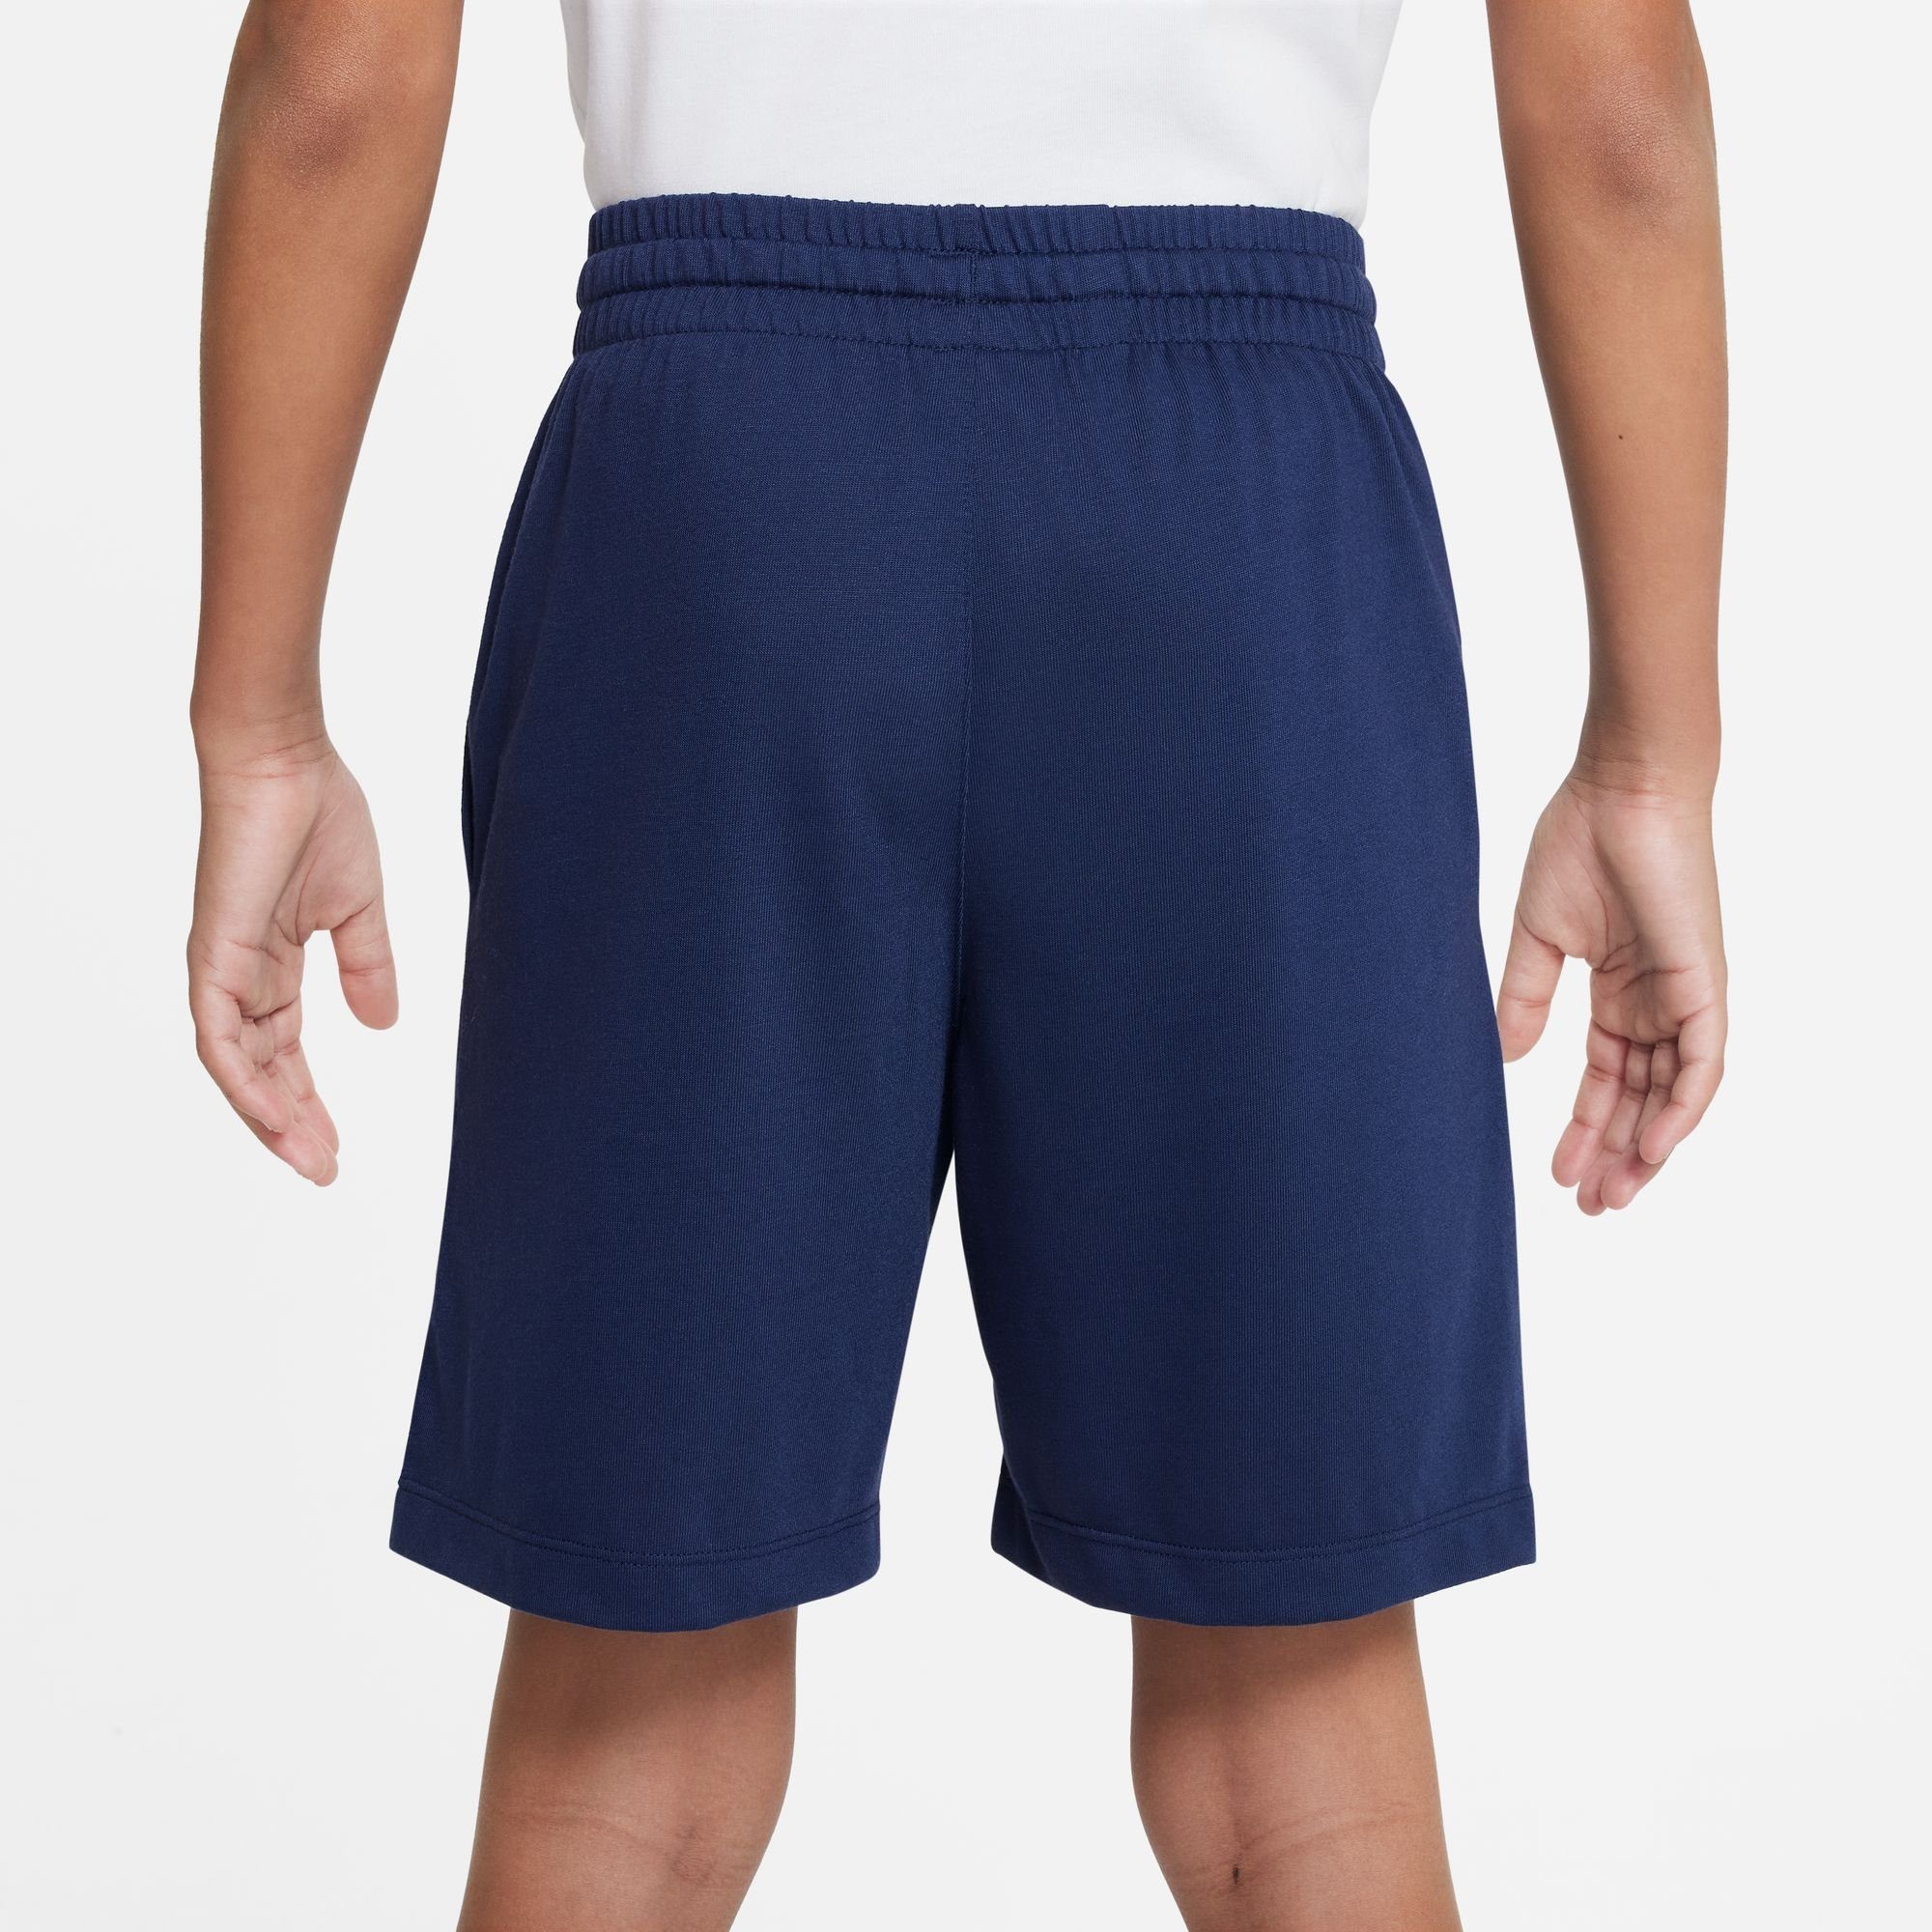 SHORTS KIDS' Shorts blau JERSEY Nike (BOYS) BIG Sportswear